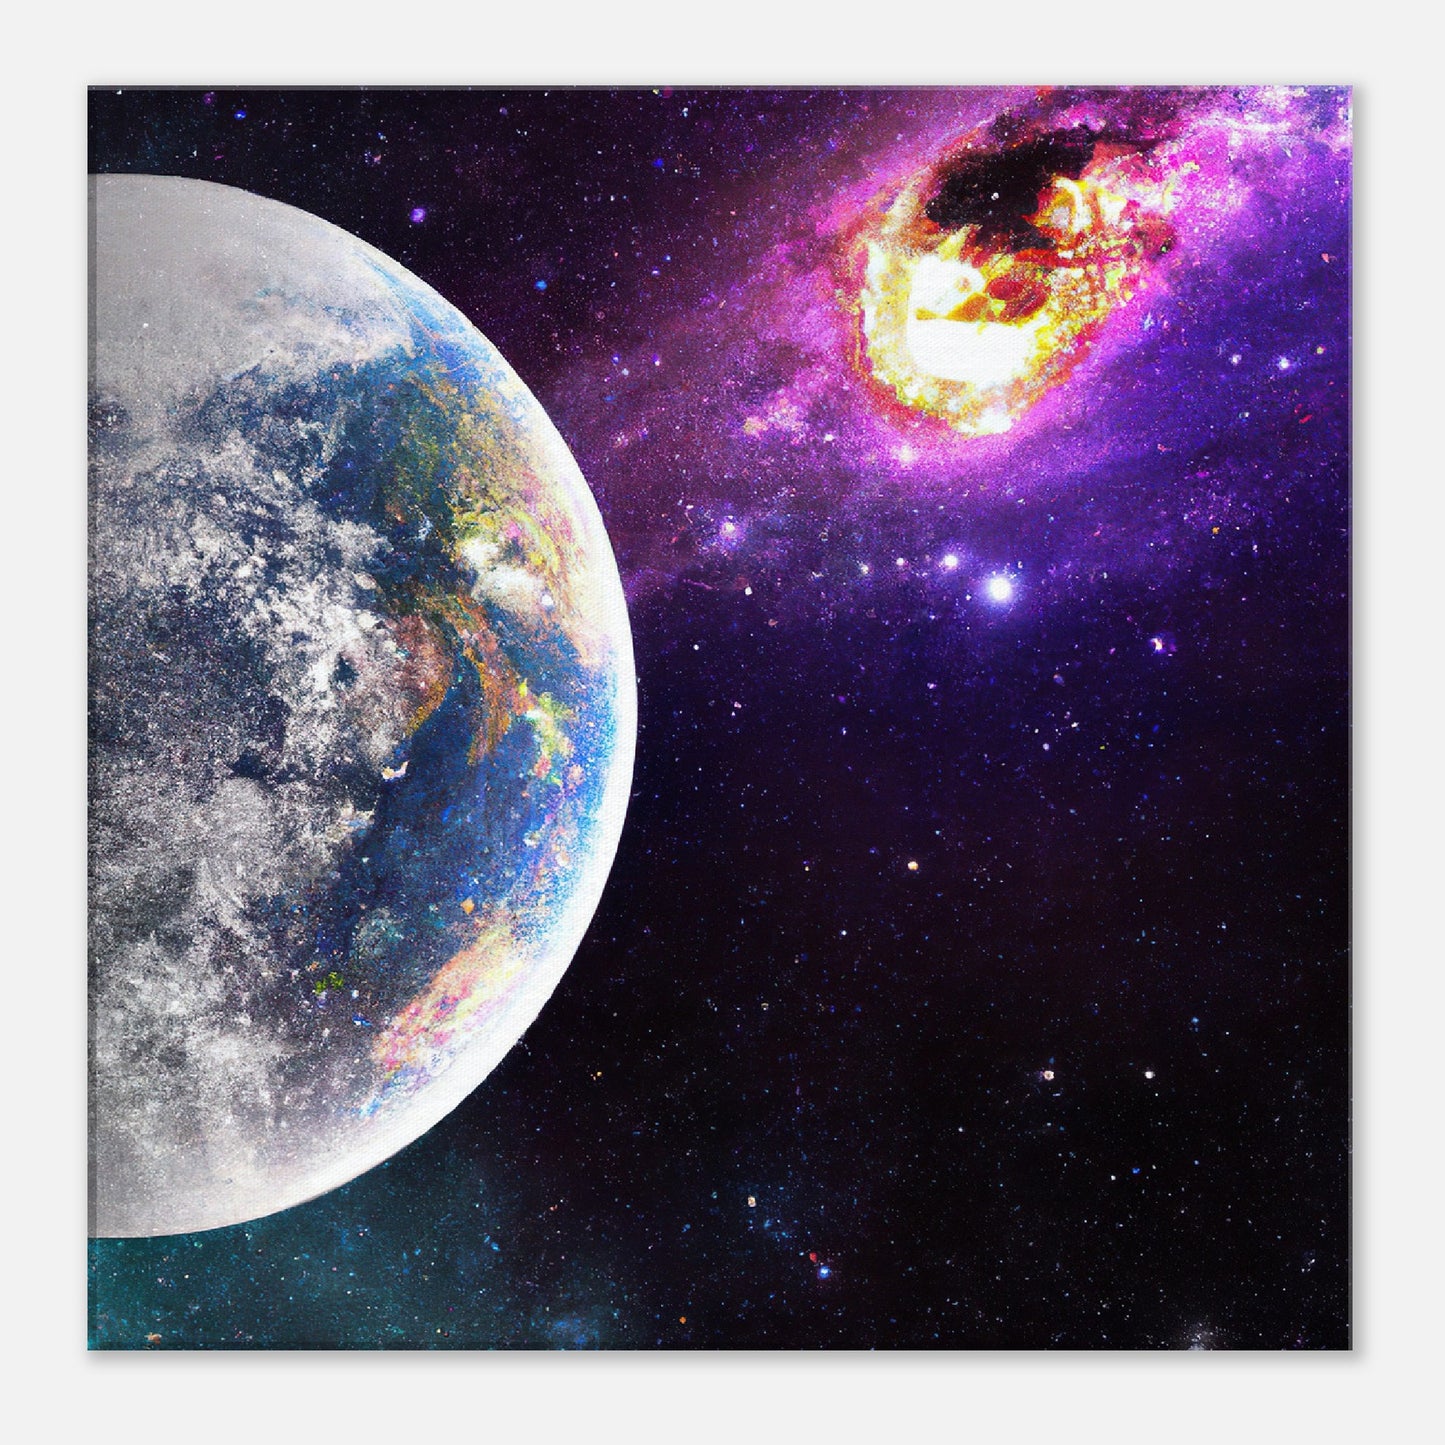 Leinwandbild - Planet und Komet im Weltraum - Digitaler Stil, KI-Kunst - RolConArt, Sci-Fi, 50x50-cm-20x20